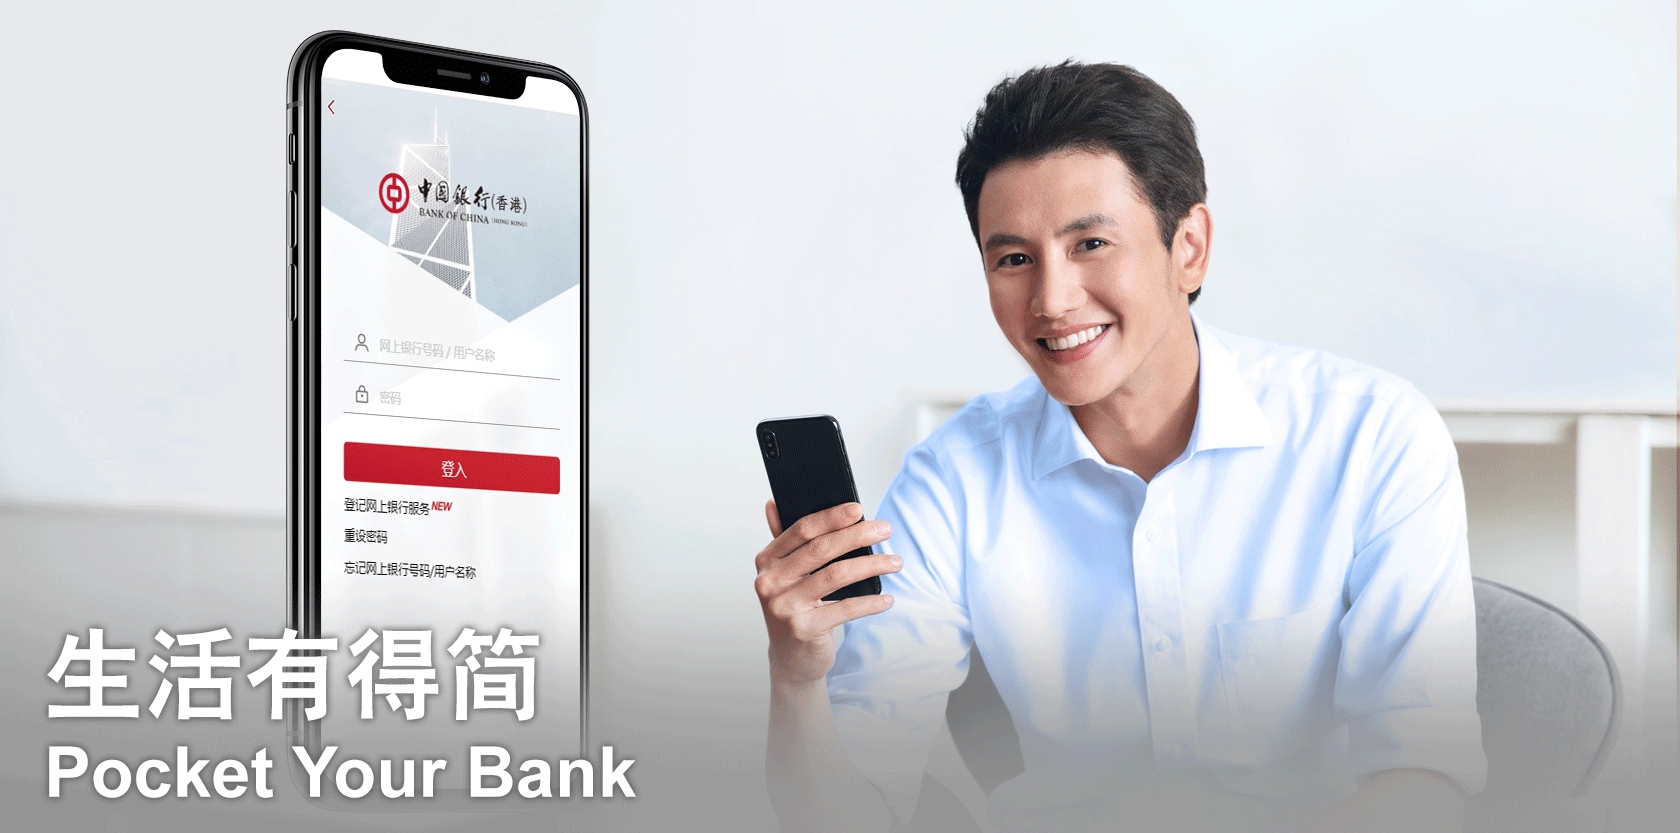 生活有得简 Pocket Your Bank
简单三步，启动手机银行服务